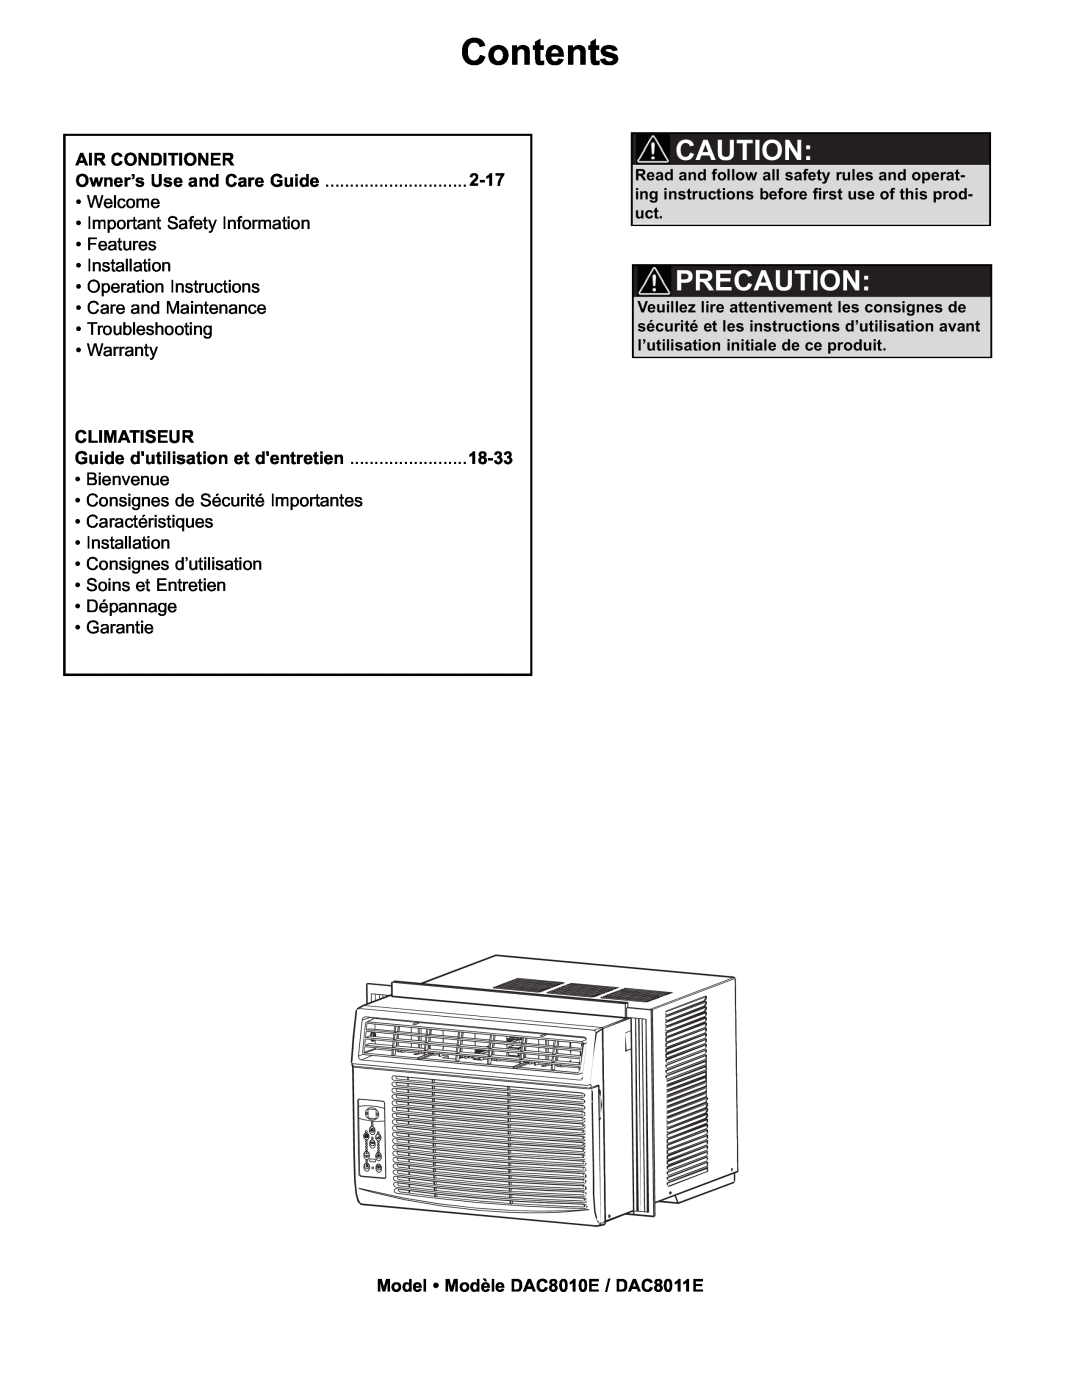 Danby manual Contents, Precaution, Air Conditioner, 2-17, Climatiseur, 18-33, Model Modèle DAC8010E / DAC8011E 